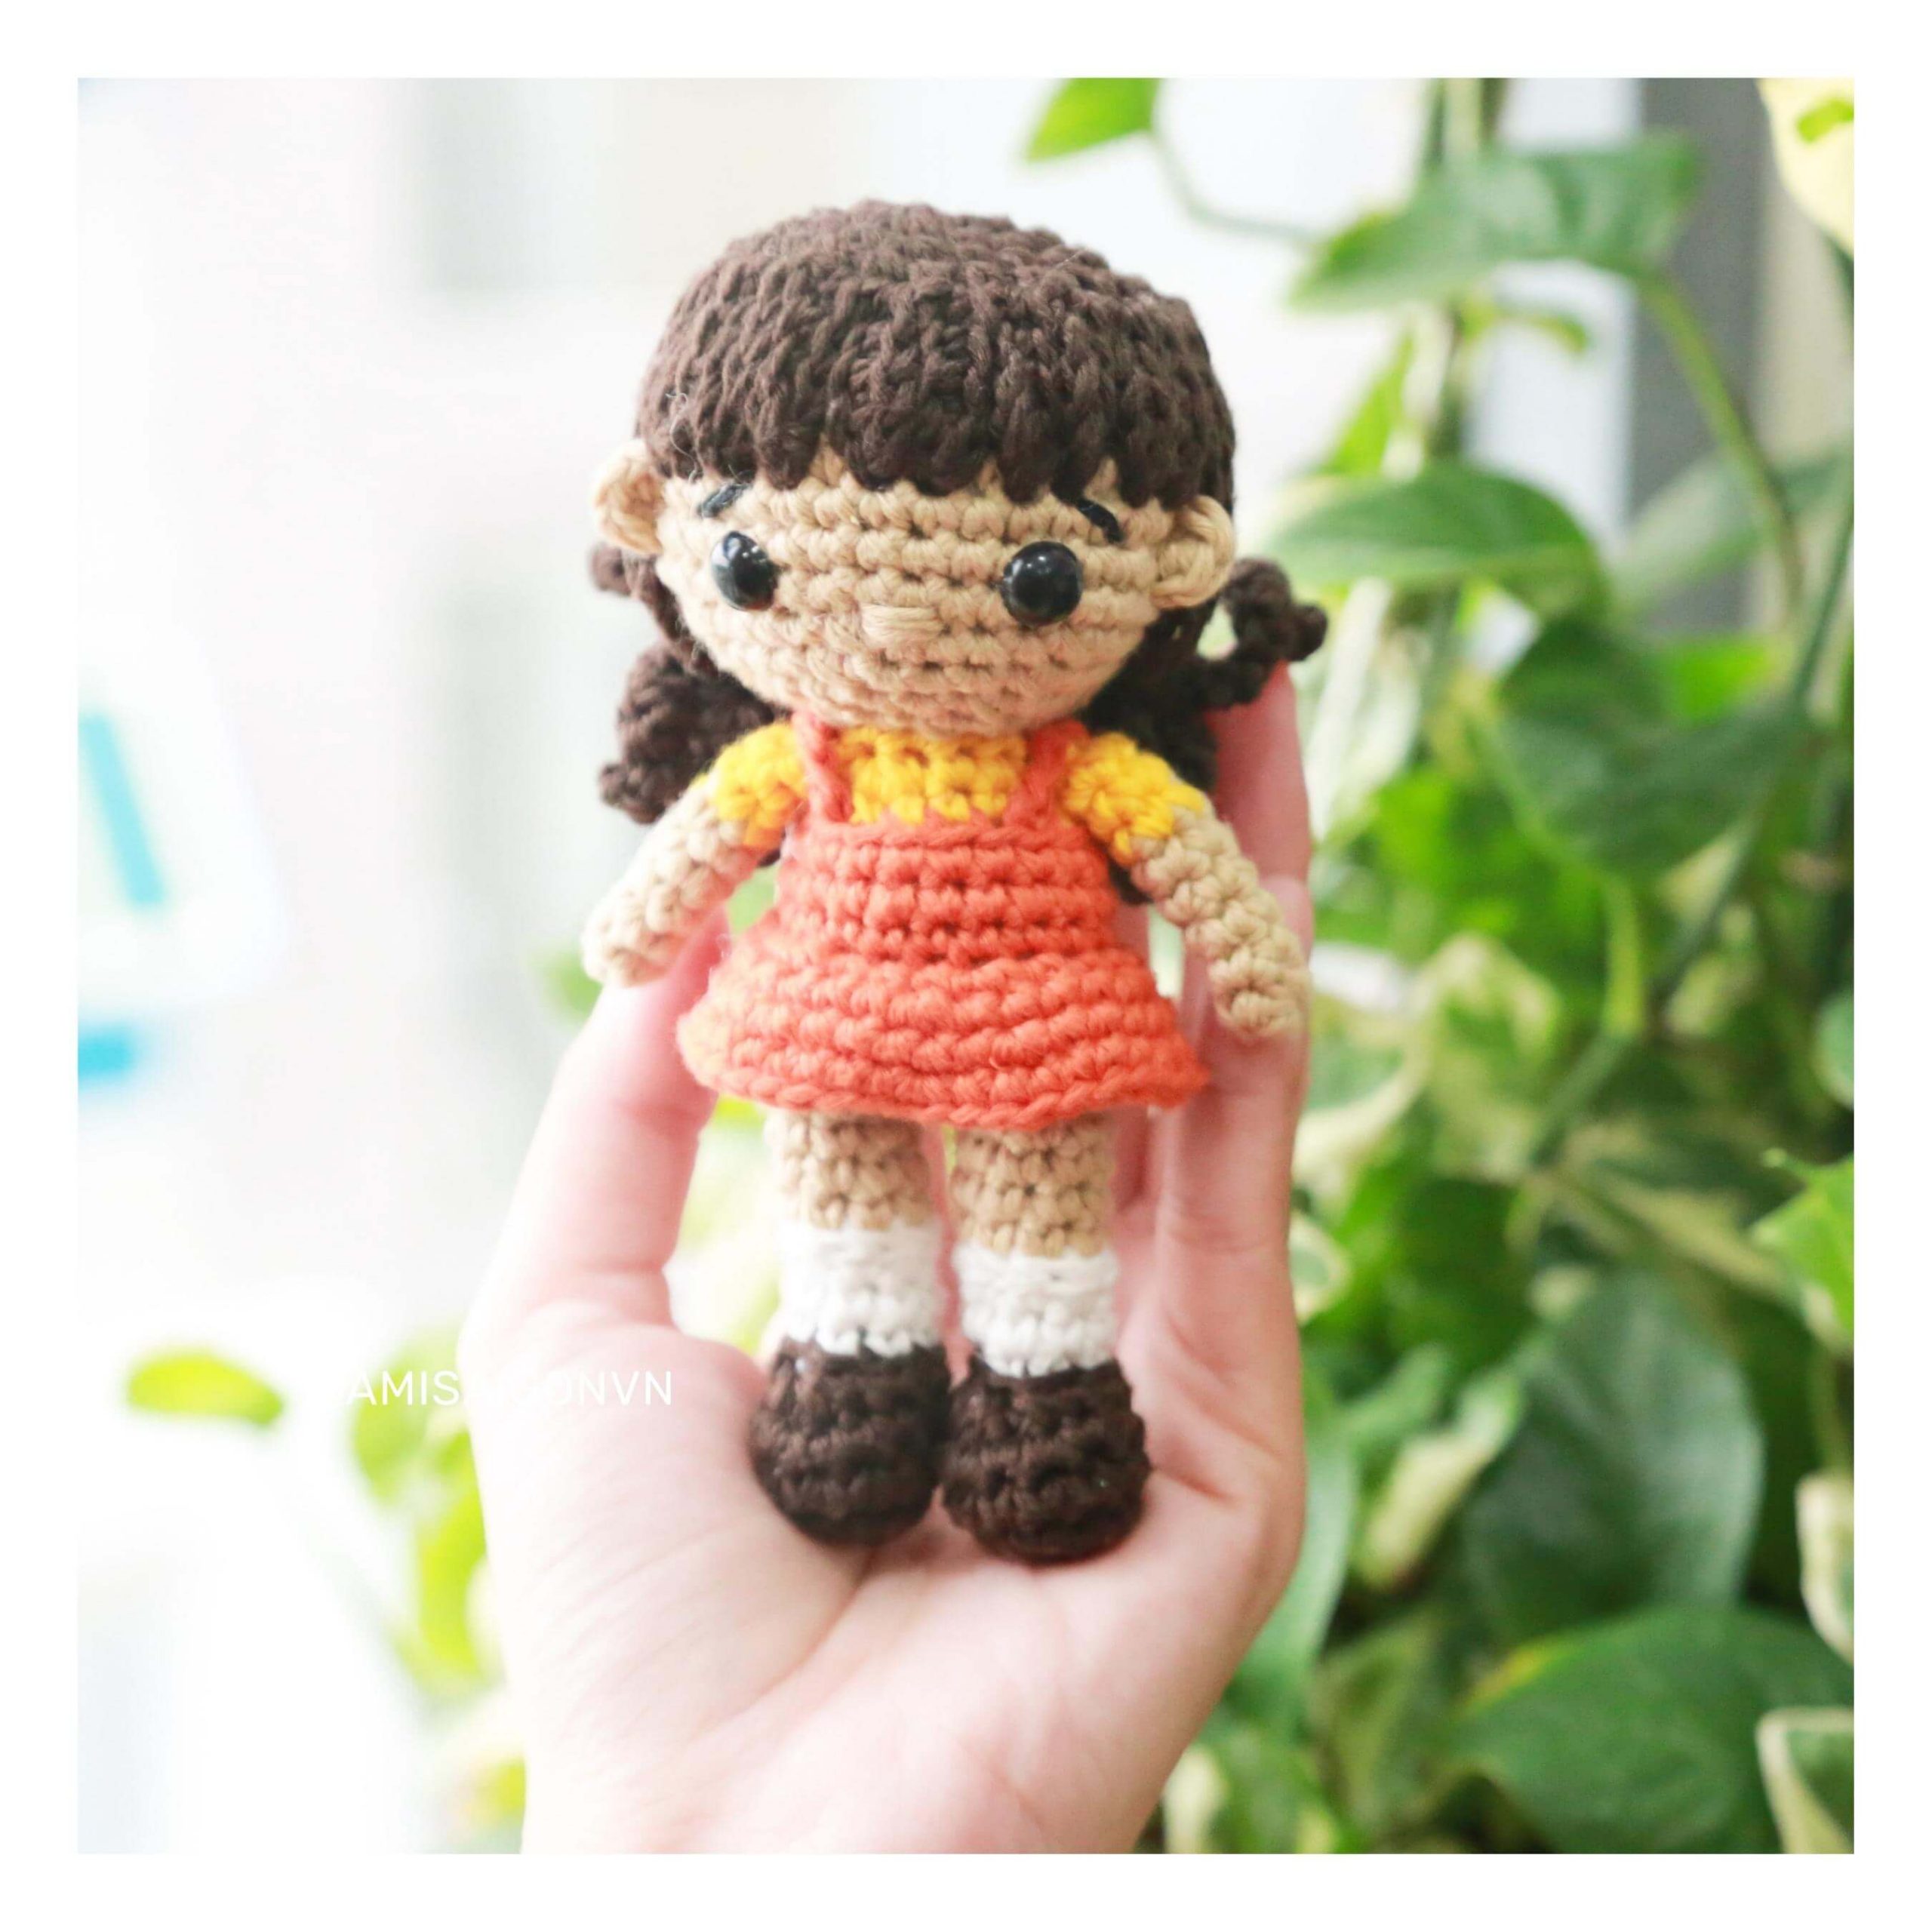 squid-game-doll-amigurumi-crochet-pattern-amisaigon (2)